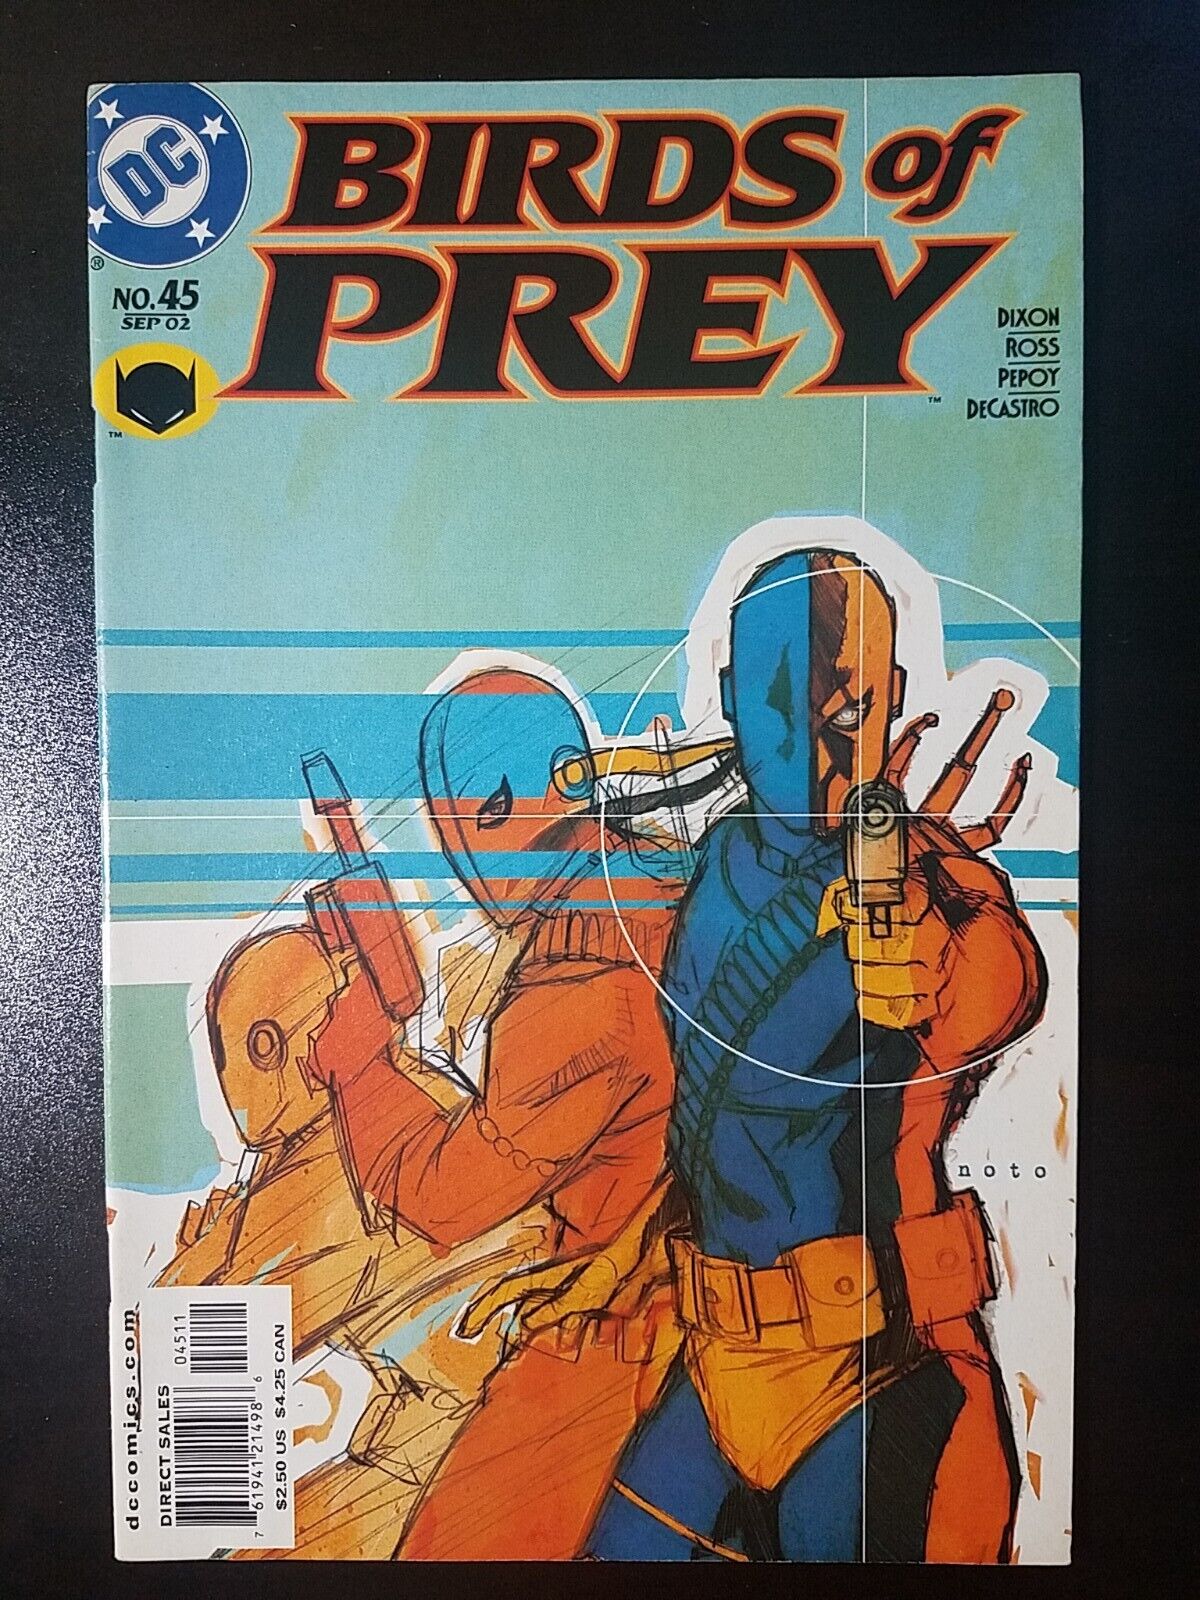 Birds of Prey #45 (DC Comics, September 2002)